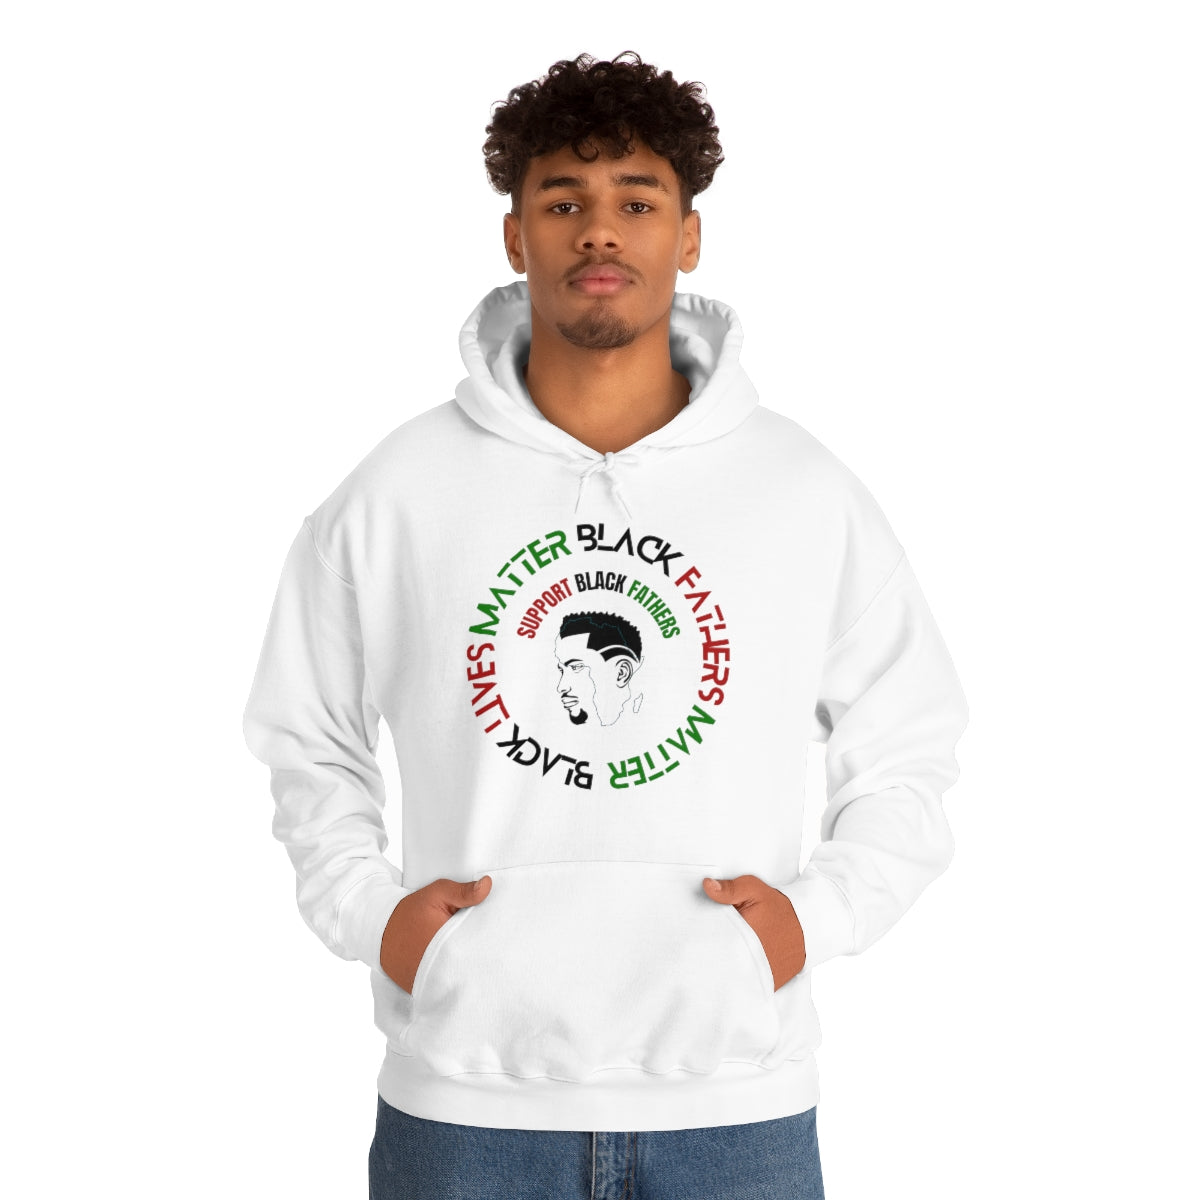 Black Fathers Matter Hooded Sweatshirt